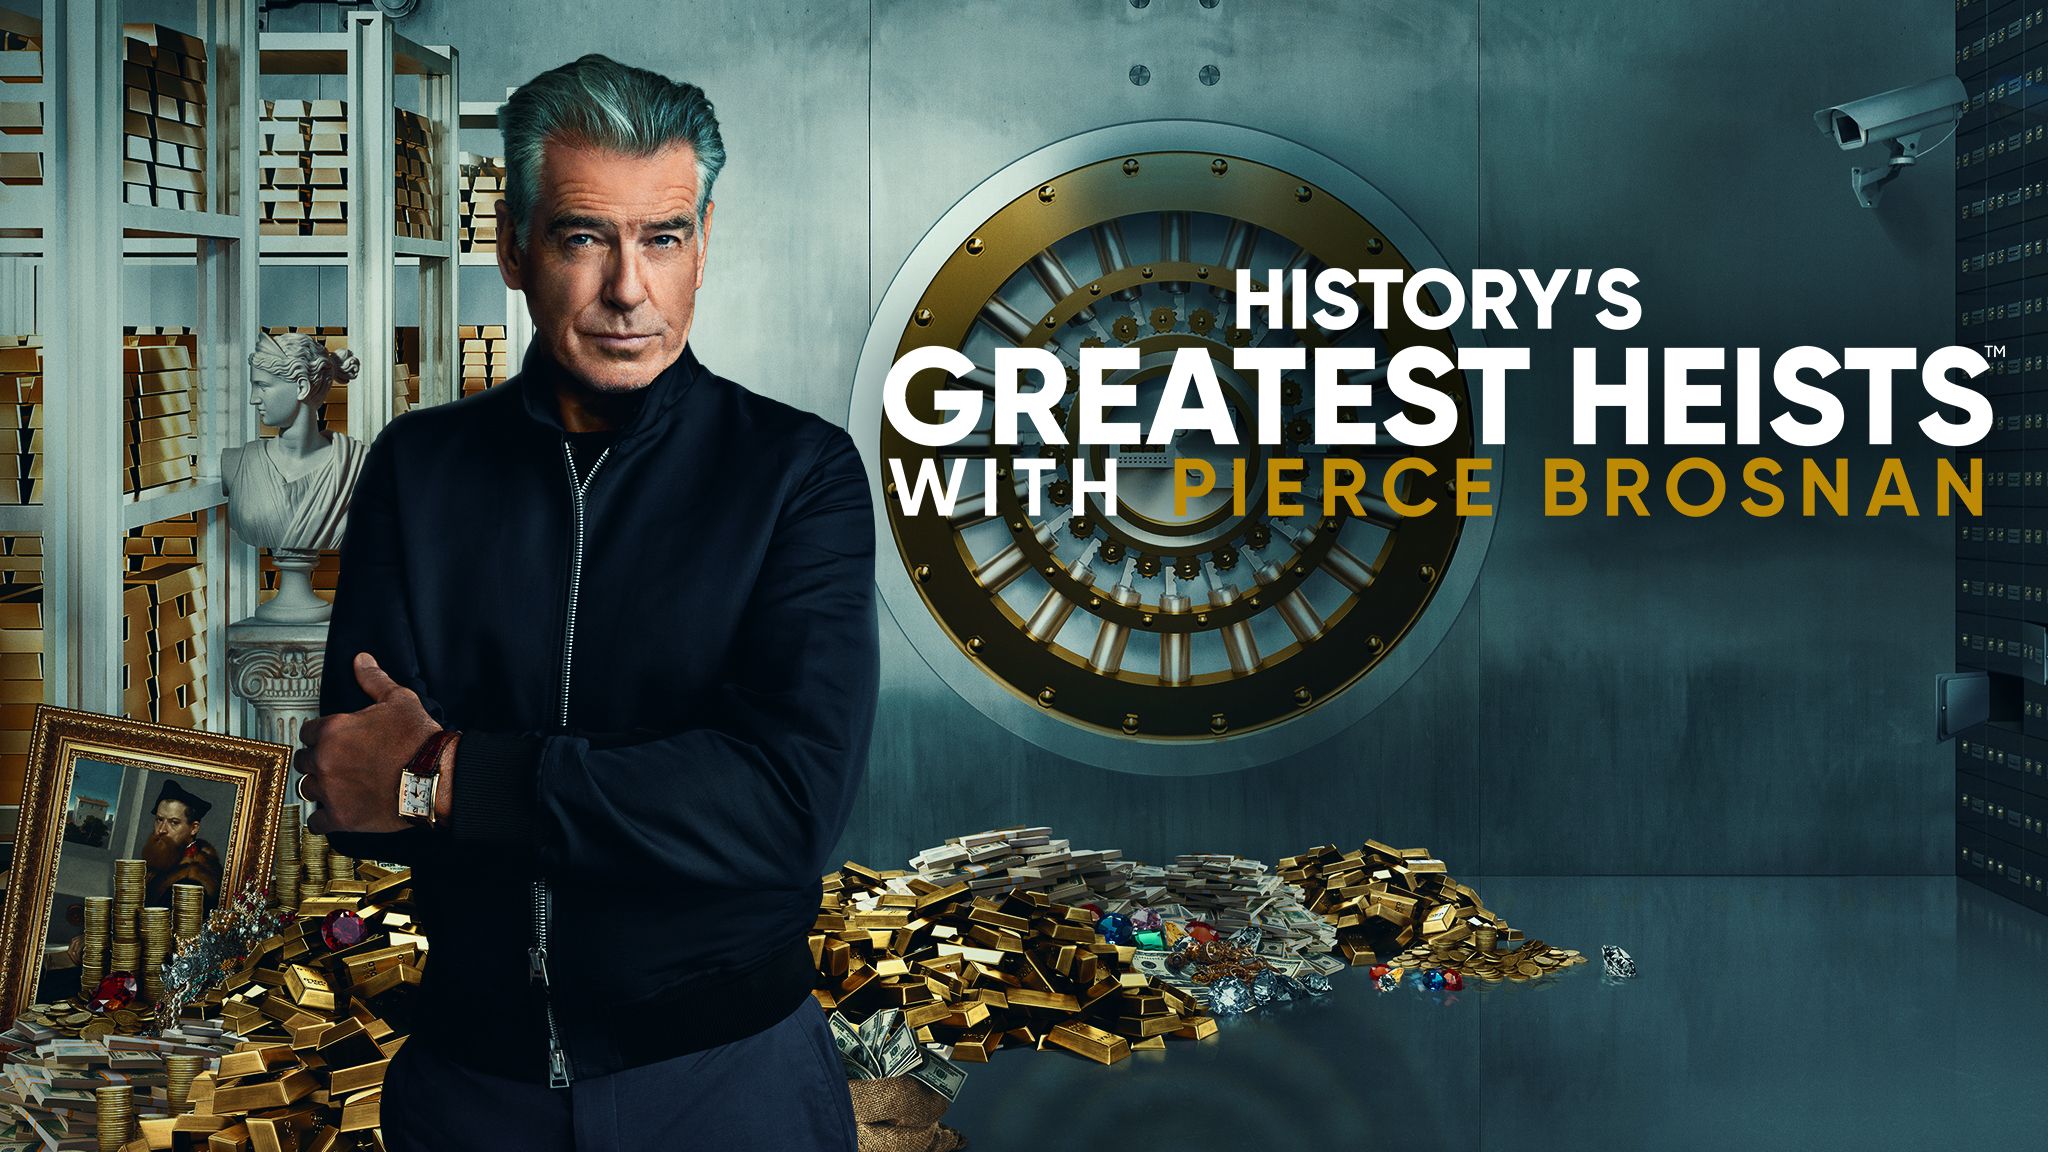 pierce-brosnan-to-host-history-s-greatest-heists-tv-series